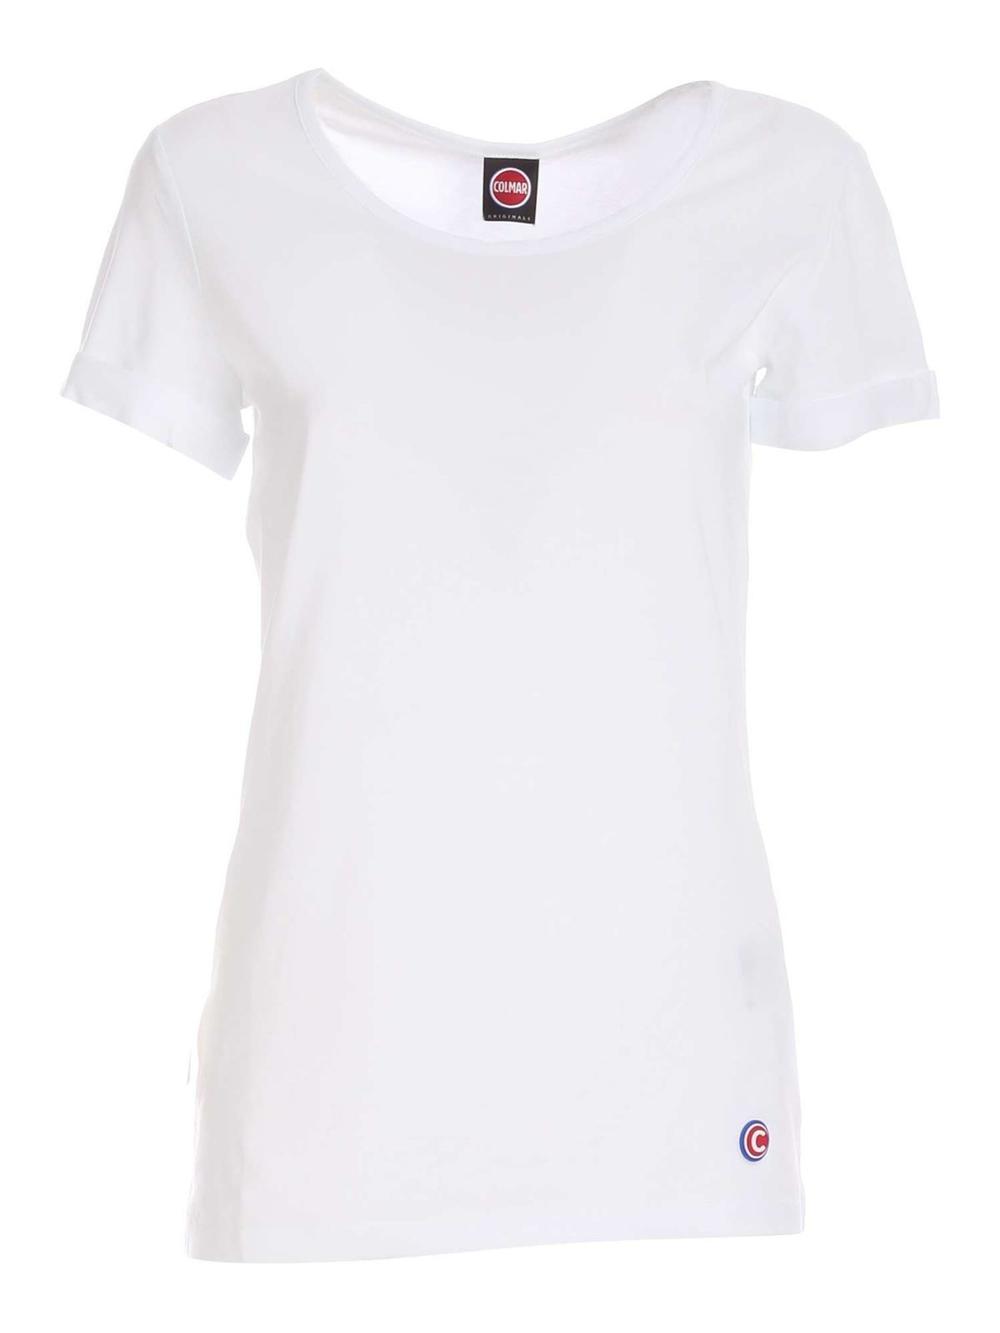 Colmar Originals - T-shirt in Cotone Bianco Donna - 8674 7TQ 01